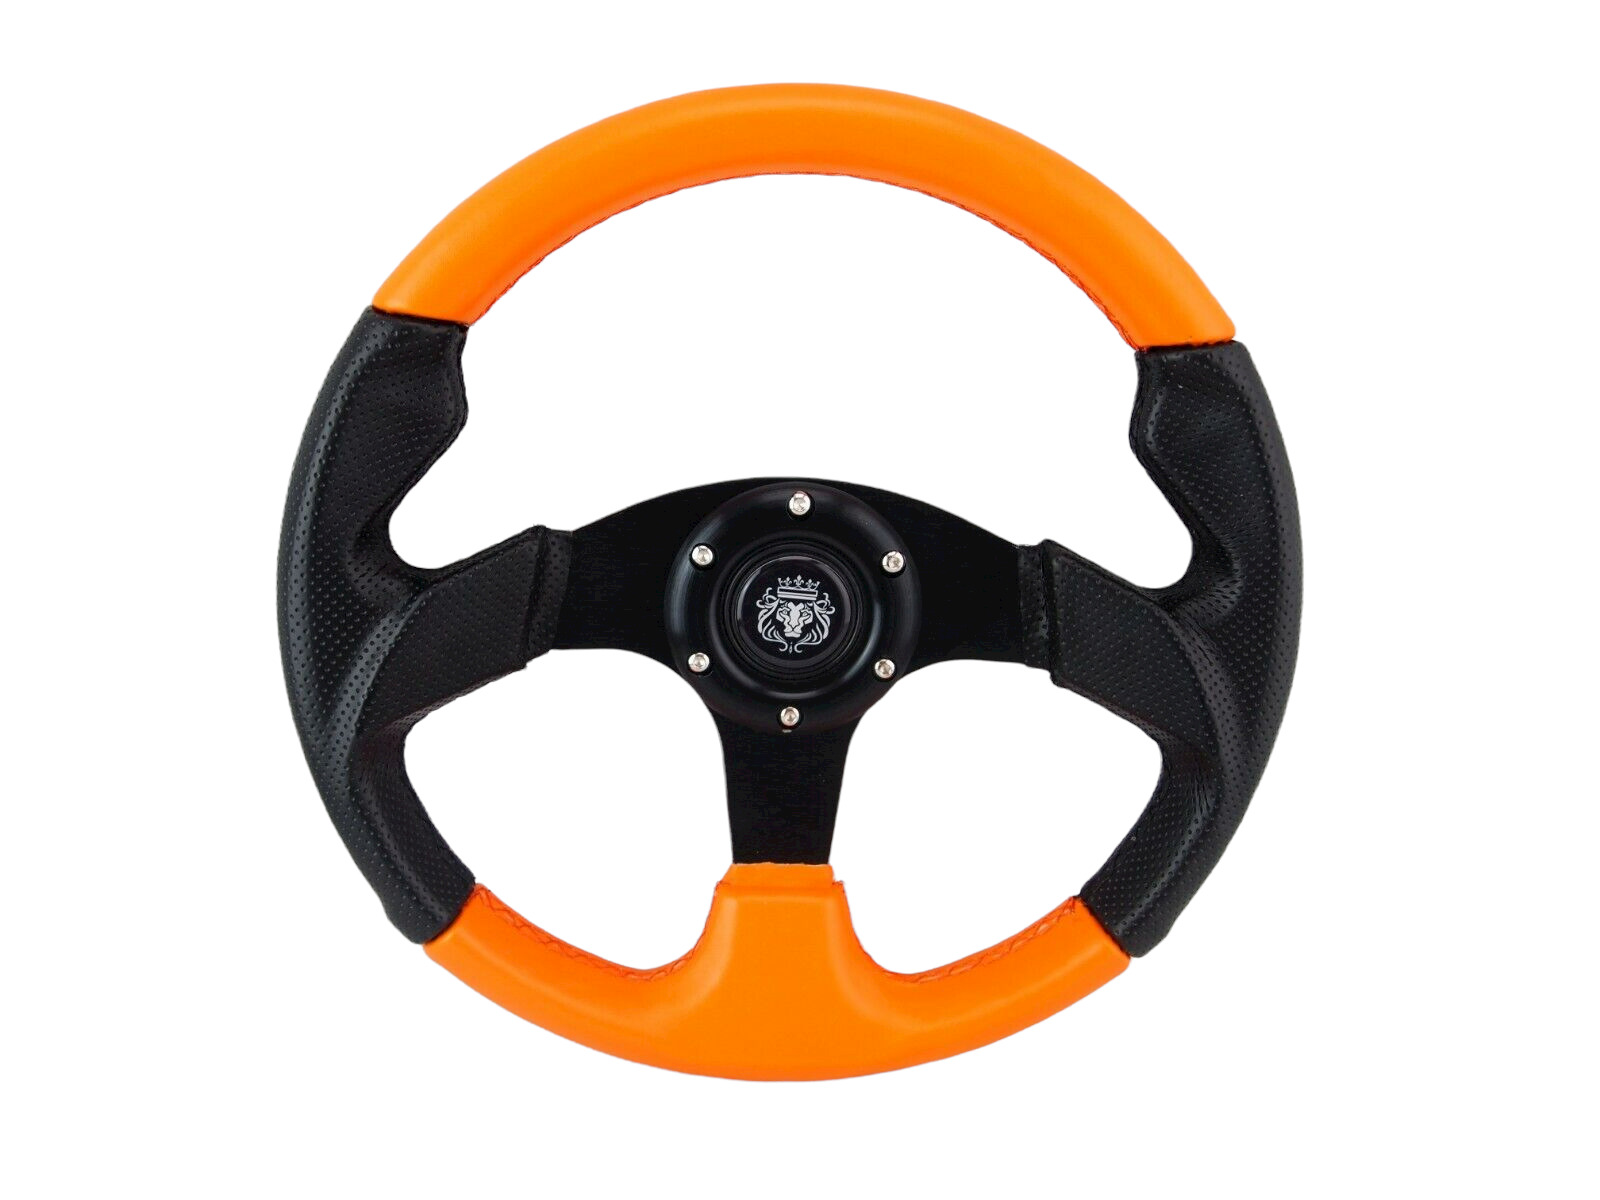 CLUB CAR PRECEDENT Orange steering wheel golf cart With Black Adapter 3 spoke